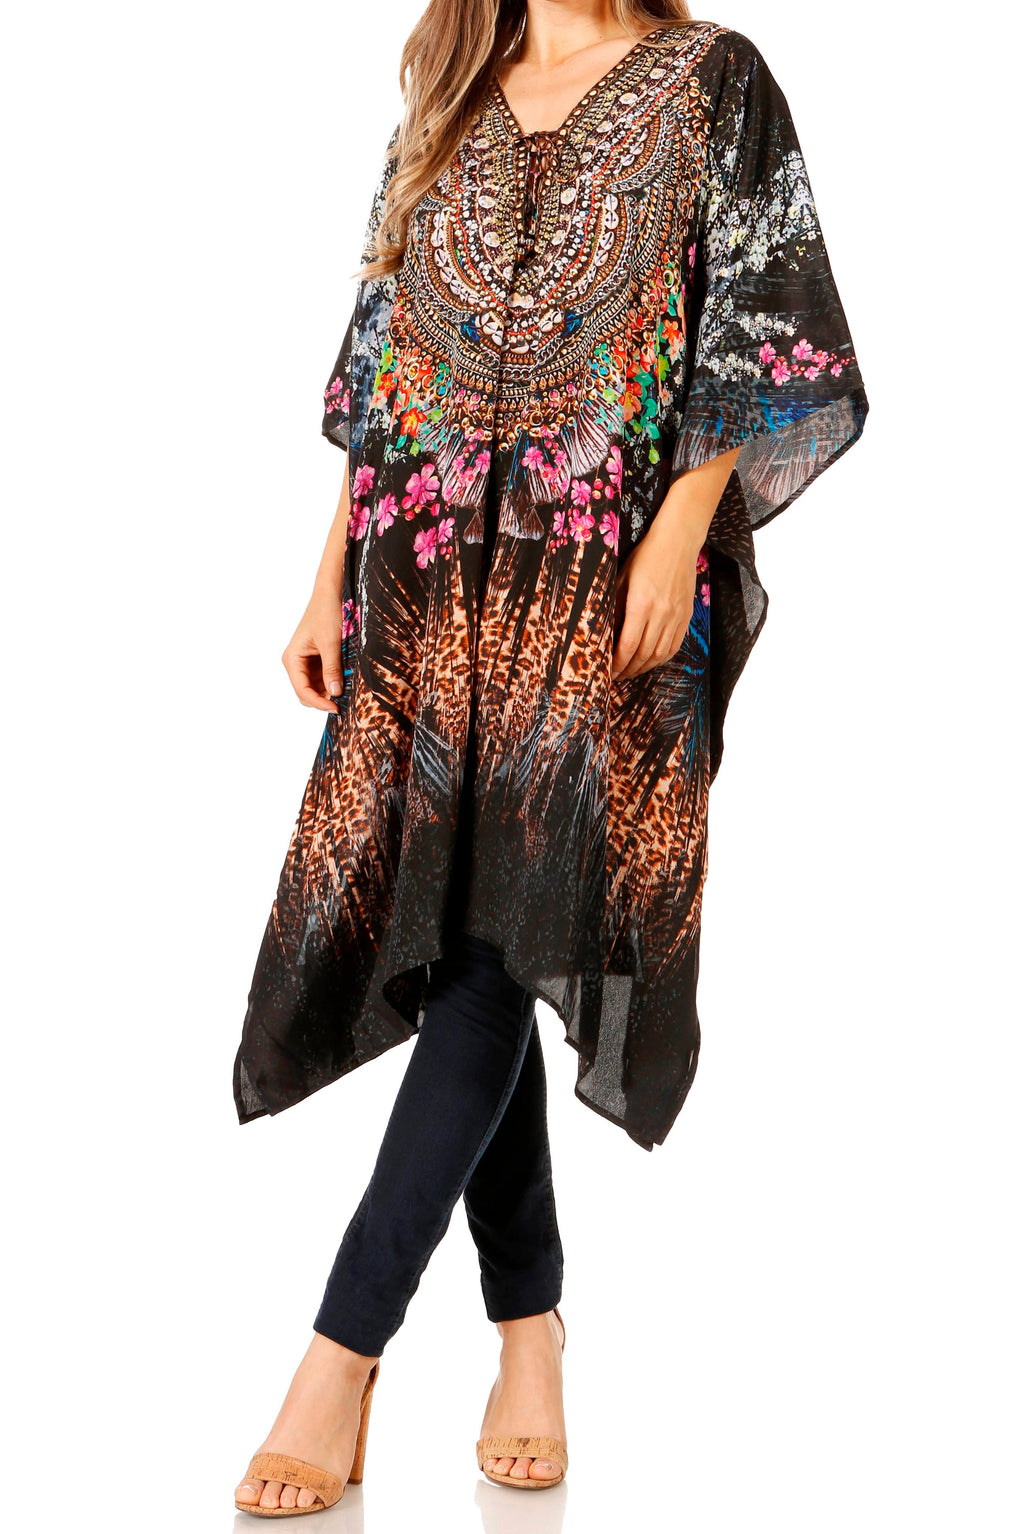 Sakkas Zeni Women's Short sleeve V-neck Summer Floral Print Caftan Dre